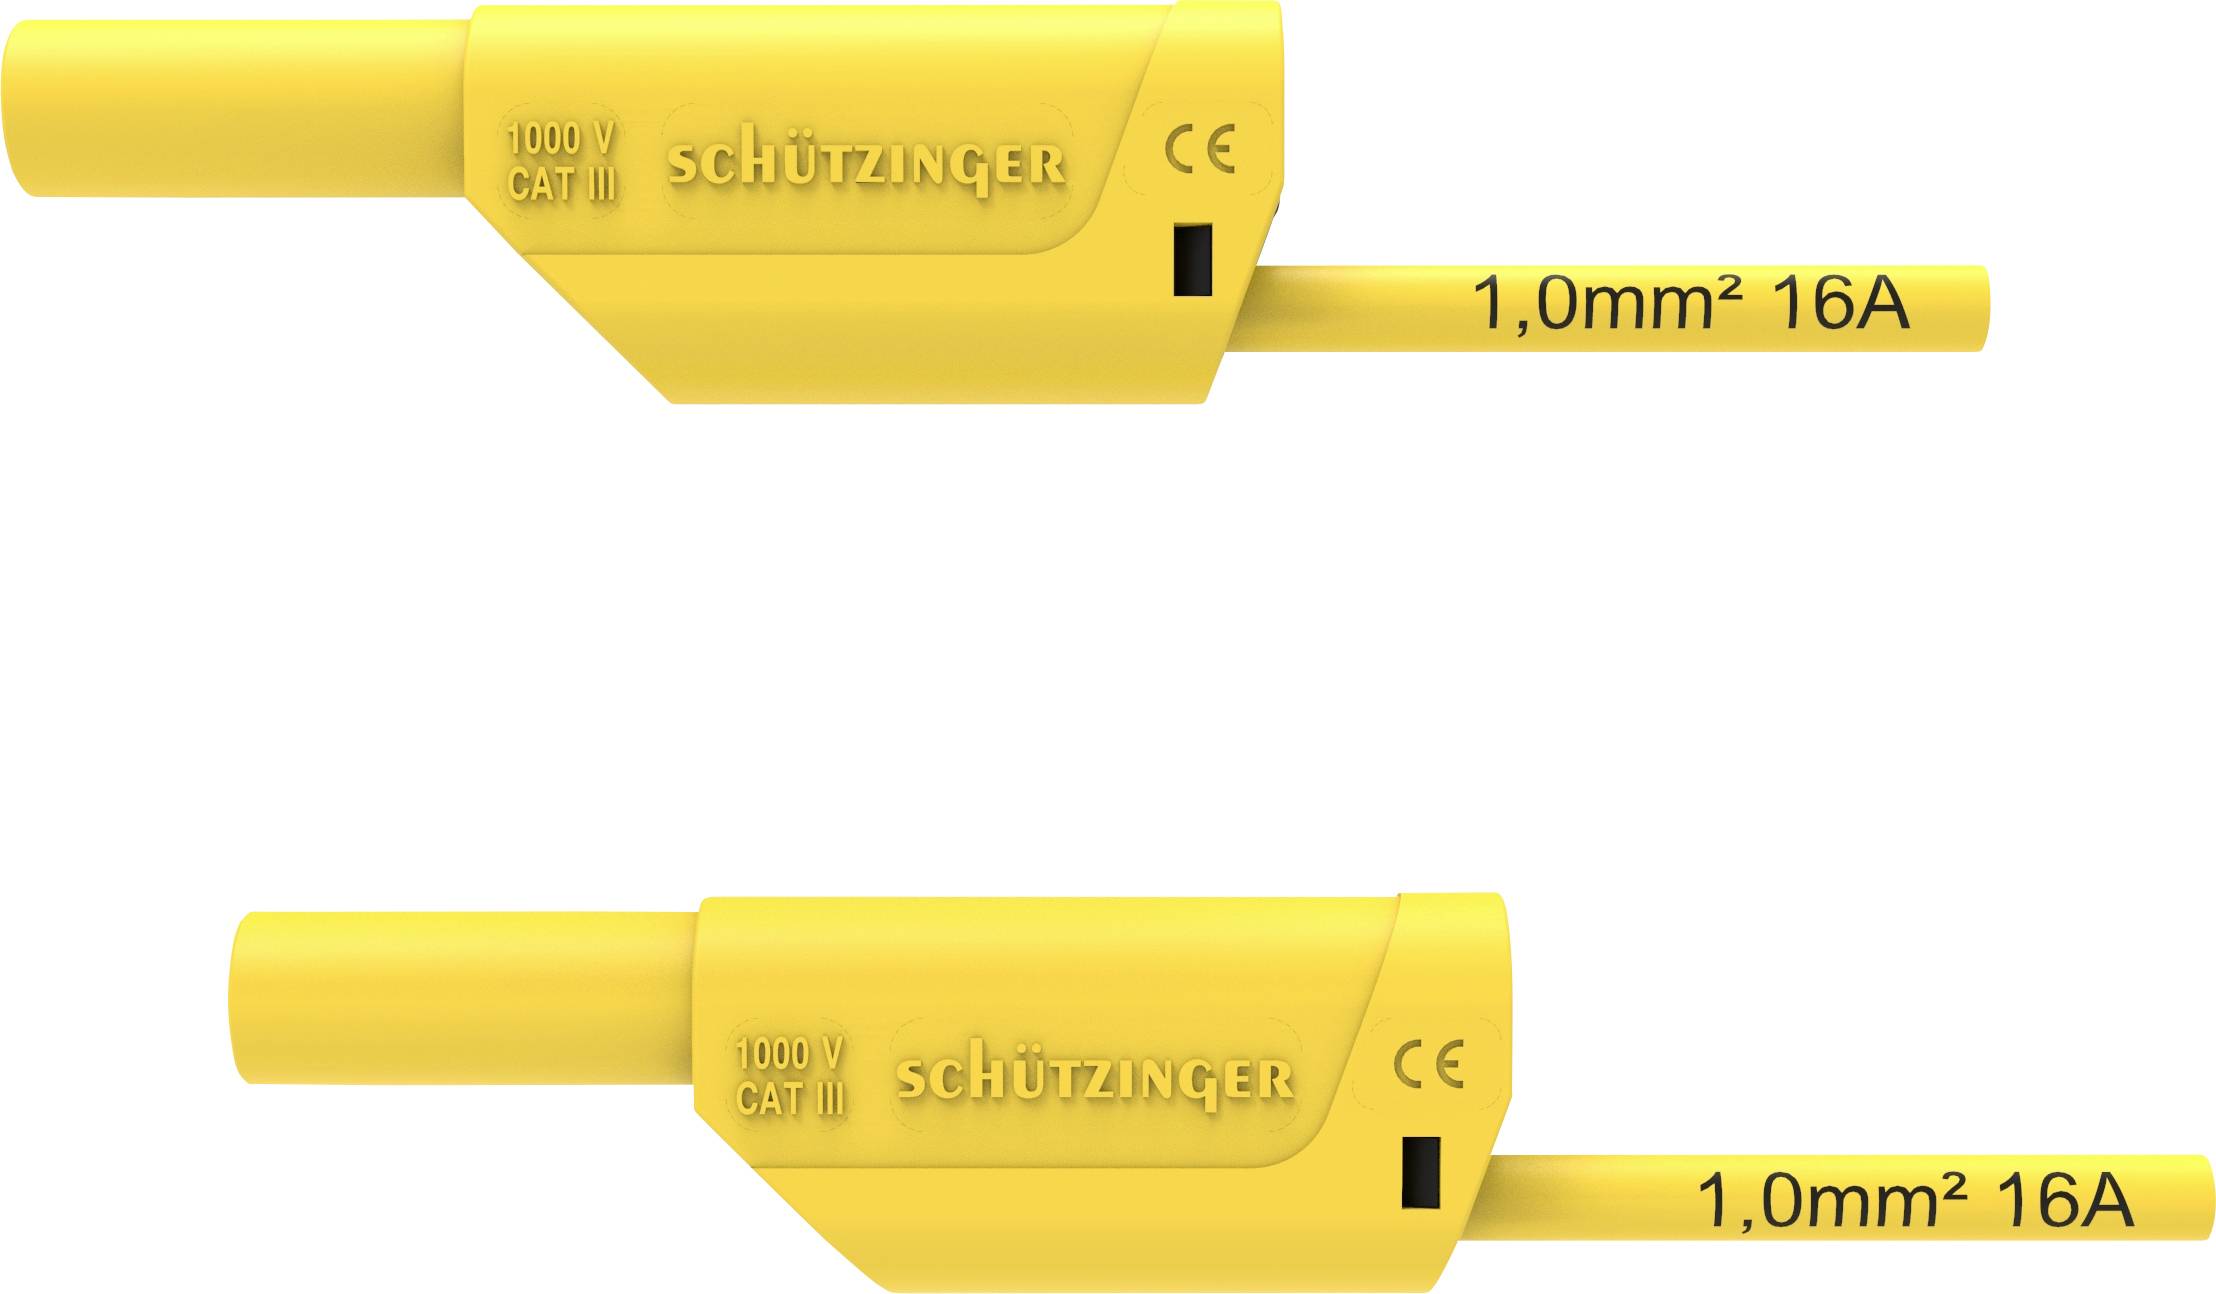 SCHÜTZINGER VSFK 8700 / 1 / 200 / GE Sicherheits-Messleitung [4 mm-Stecker - 4 mm-Stecker] 200.